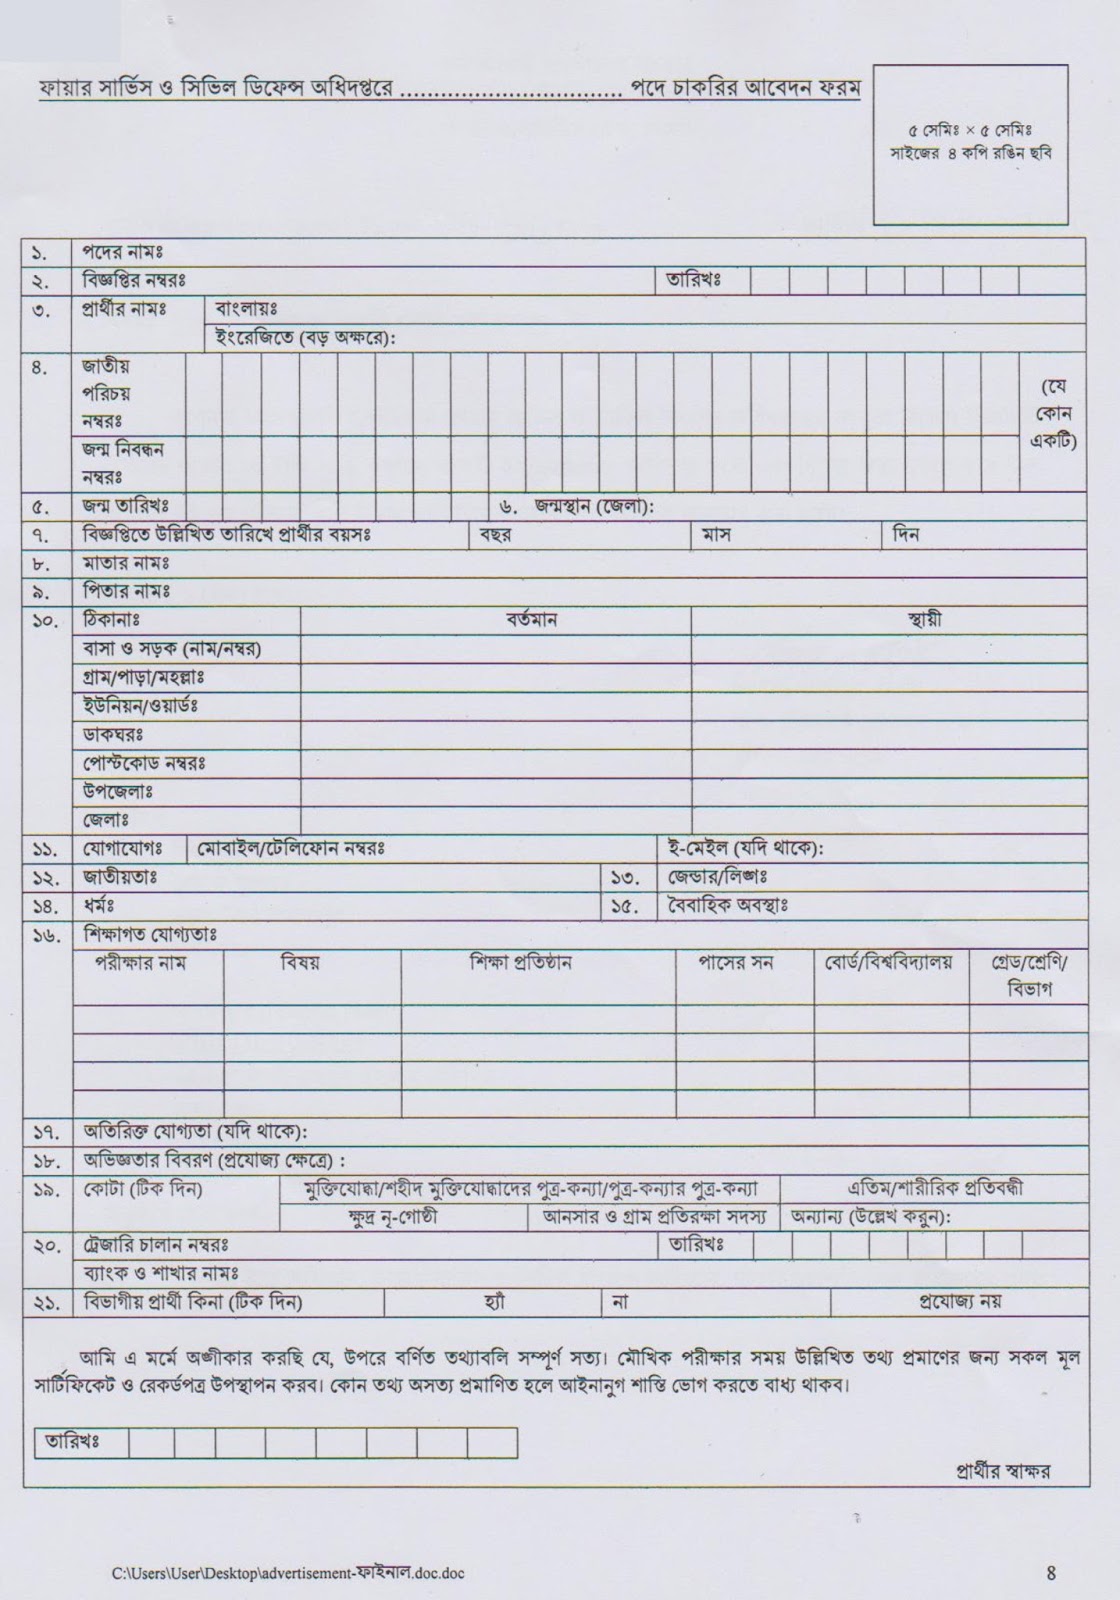 Bangladesh Fire Service and Civil Defence (FSCD) Recruitment Application Form